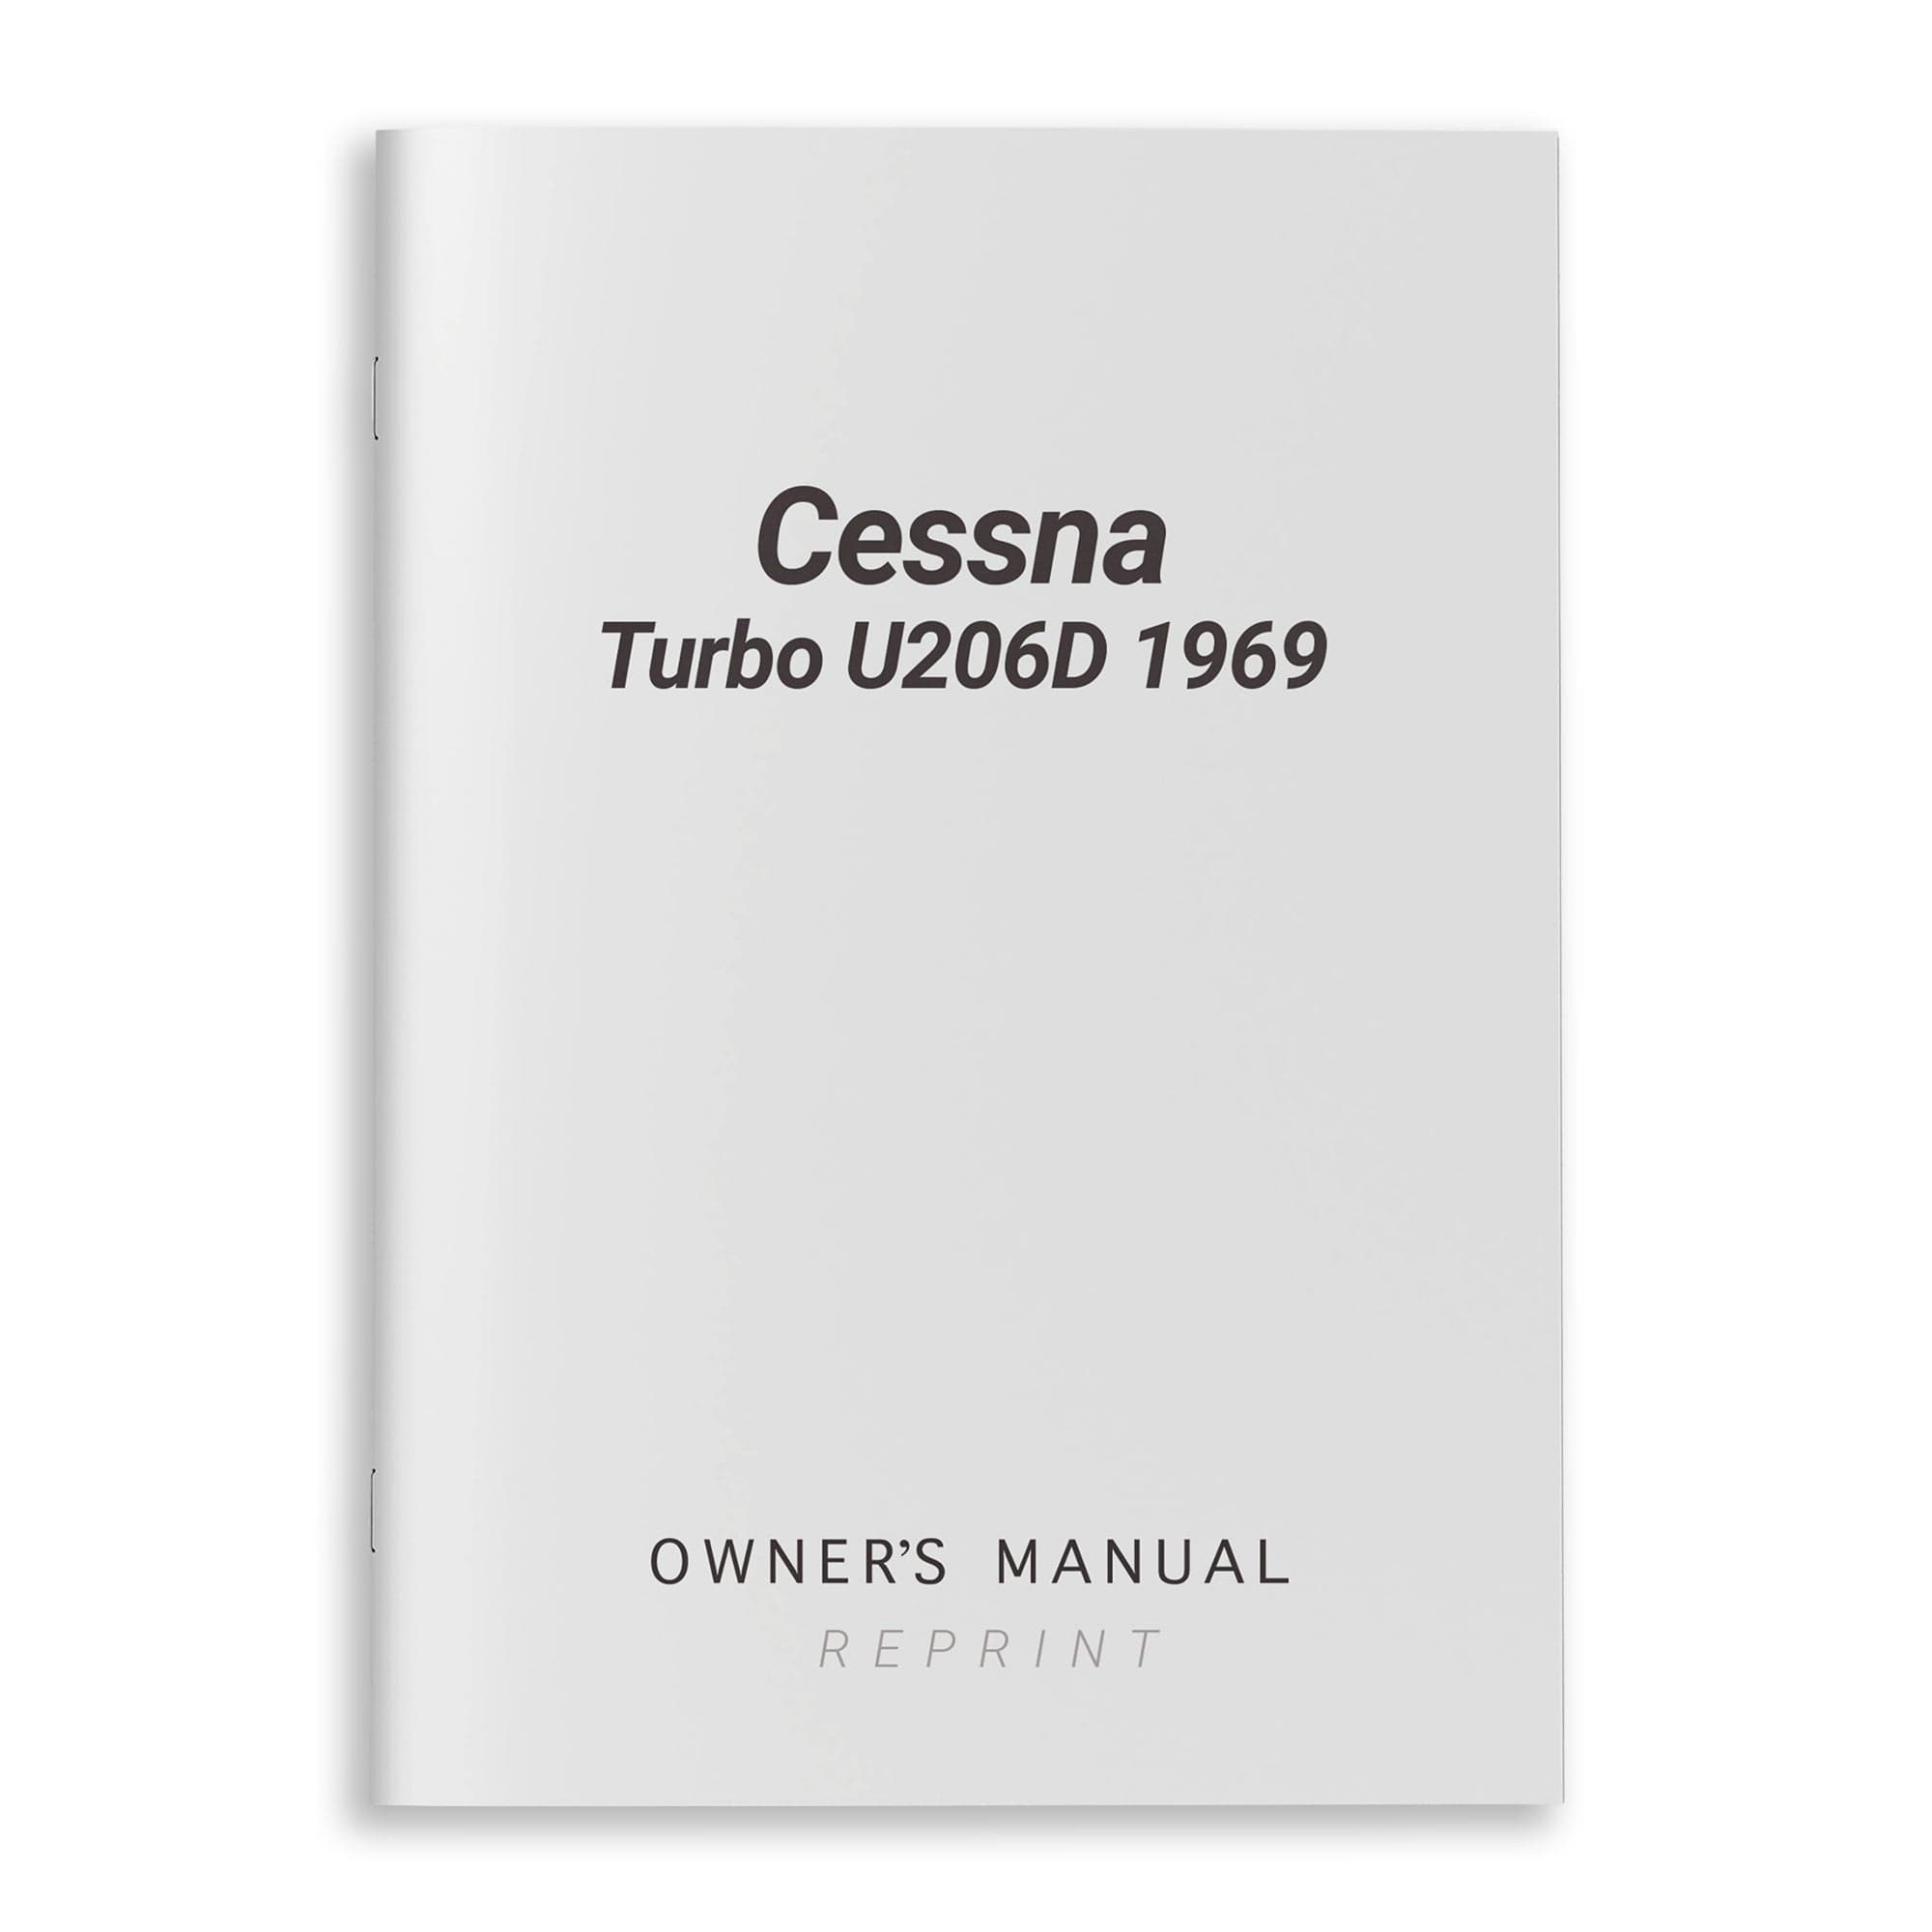 Cessna Turbo U206D 1969 Owner's Manual